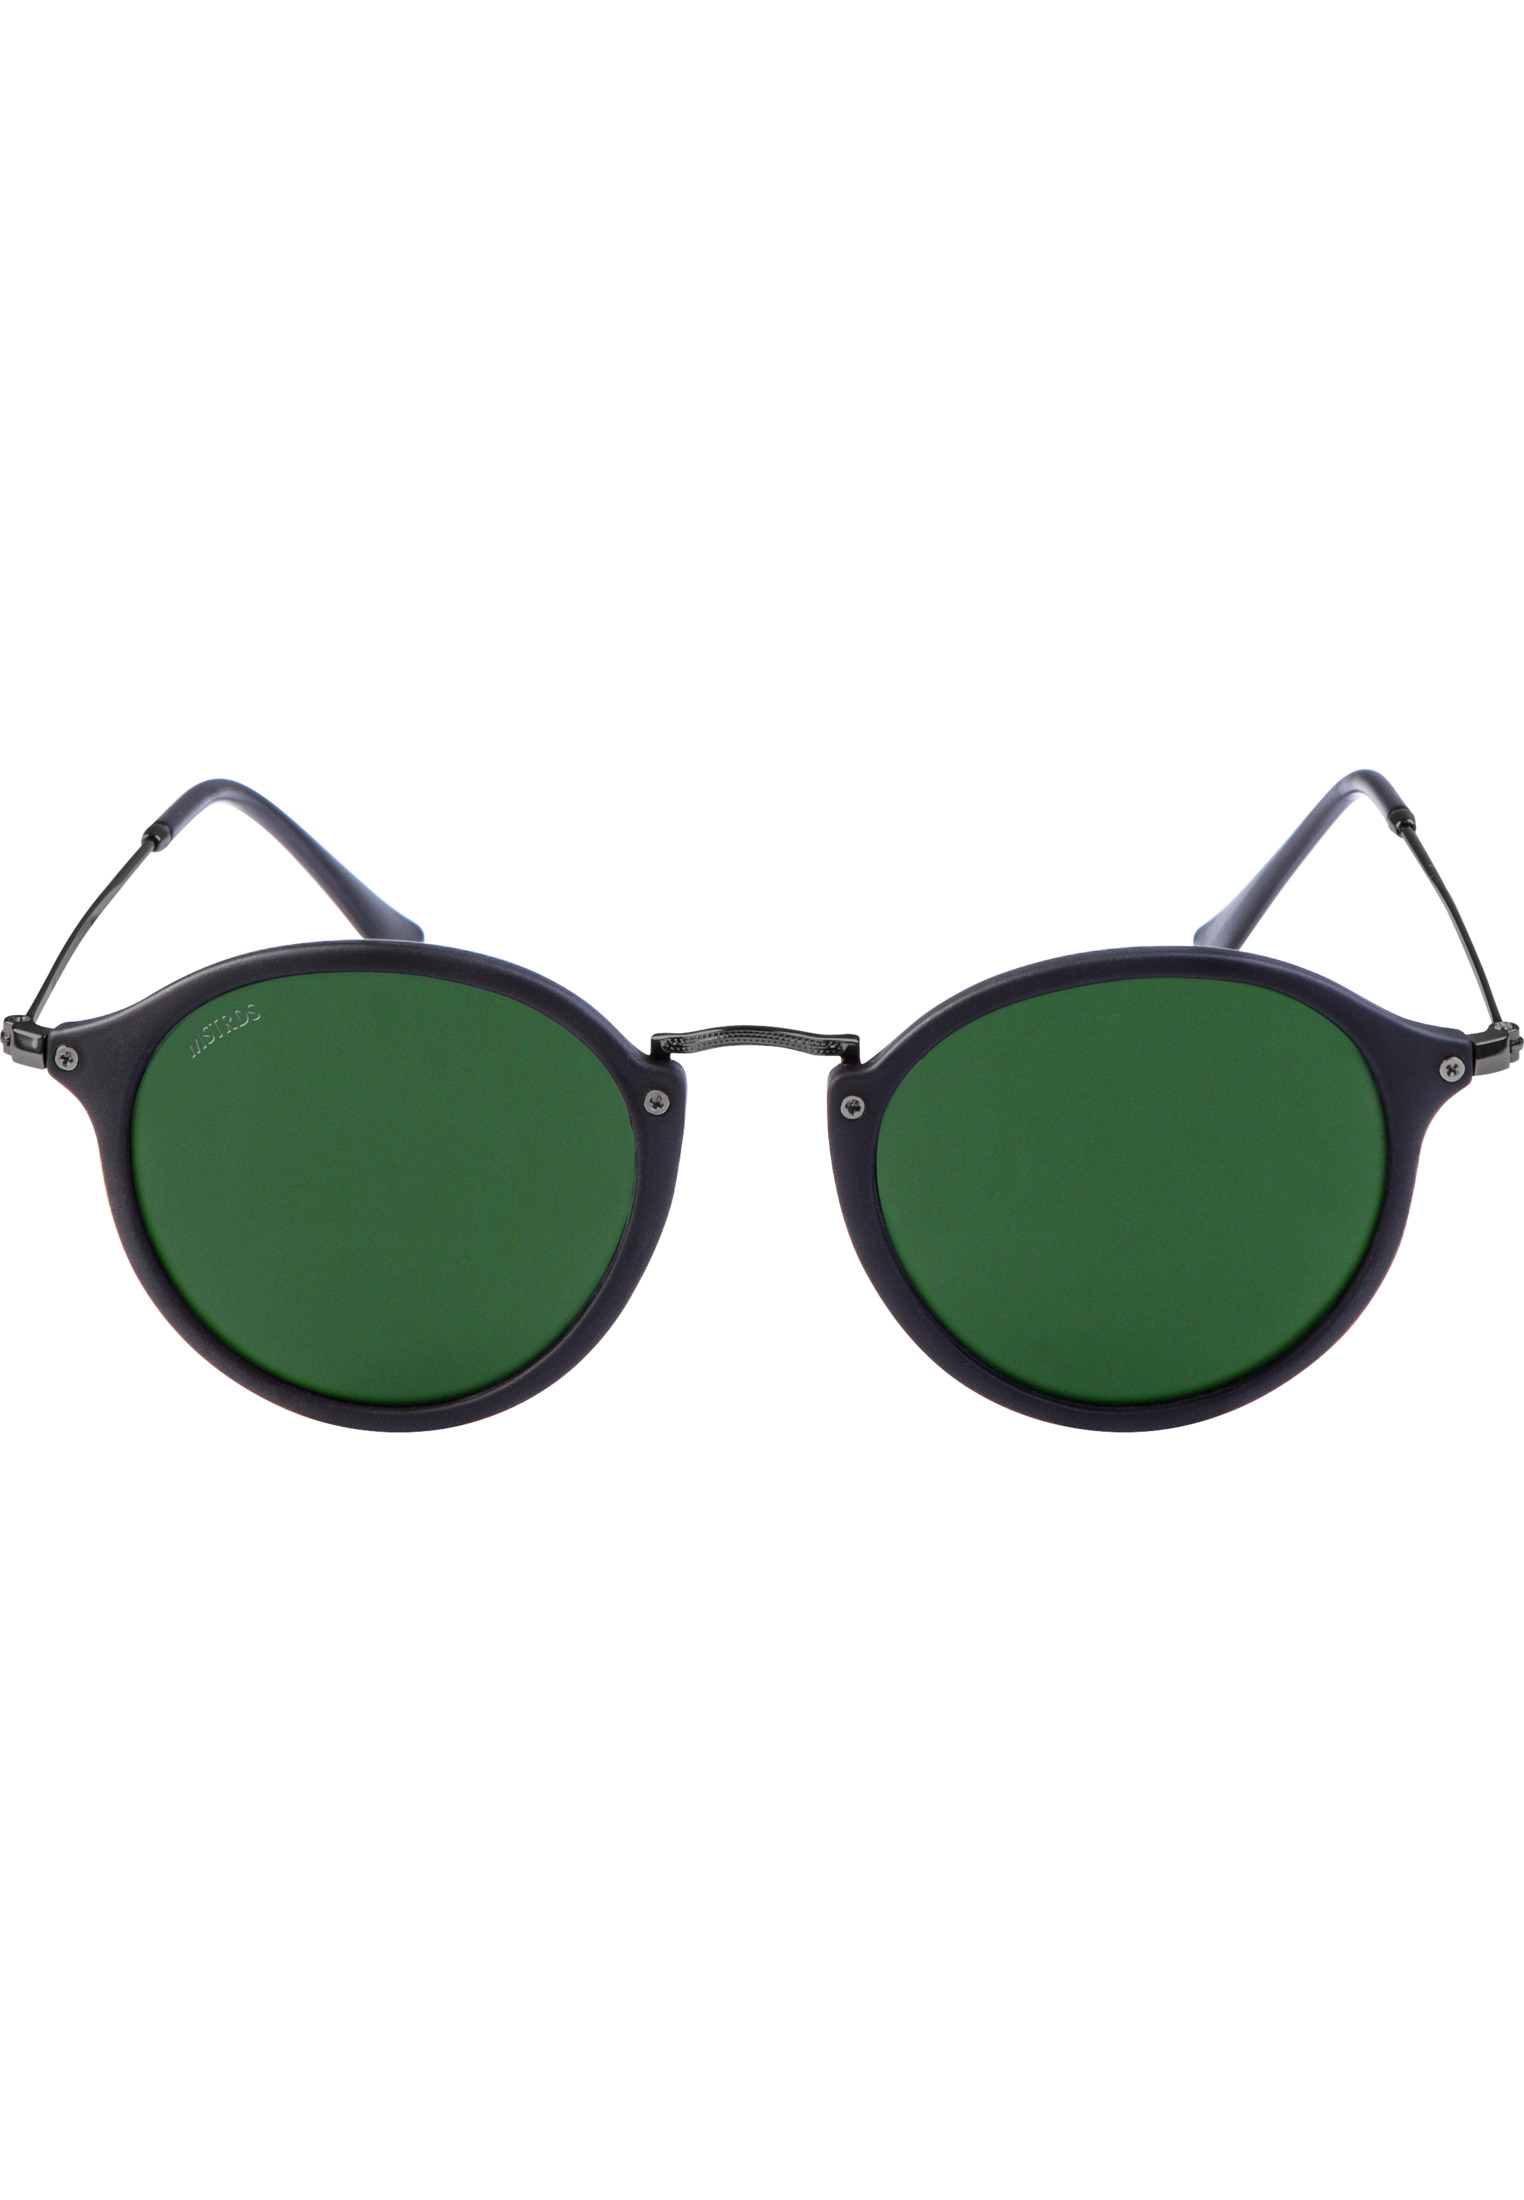 MSTRDS Herren Sonnenbrille Unisex Sunglasses | Accessoires Sonnenbrillen Spy | | Ayazo